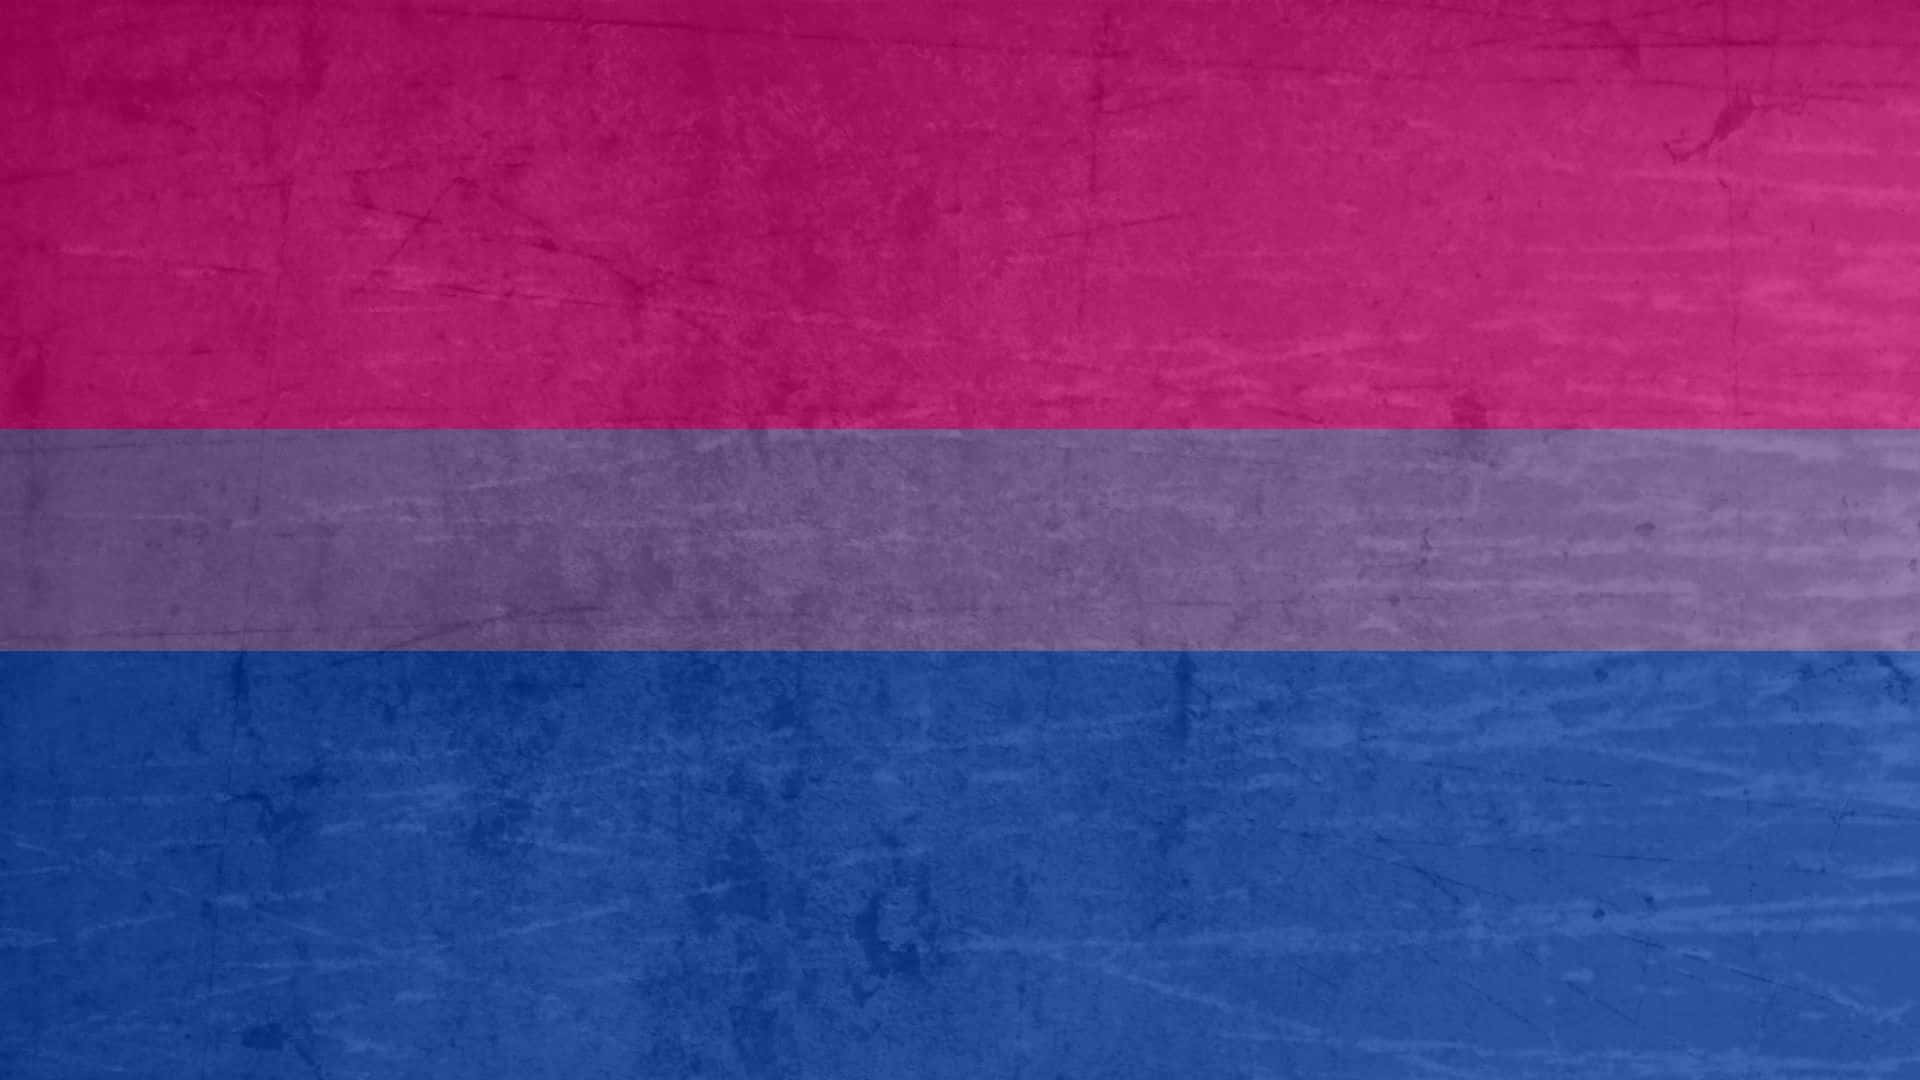 Fondode Pantalla De Bloqueo De Iphone Con La Bandera Del Orgullo Bisexual. Fondo de pantalla